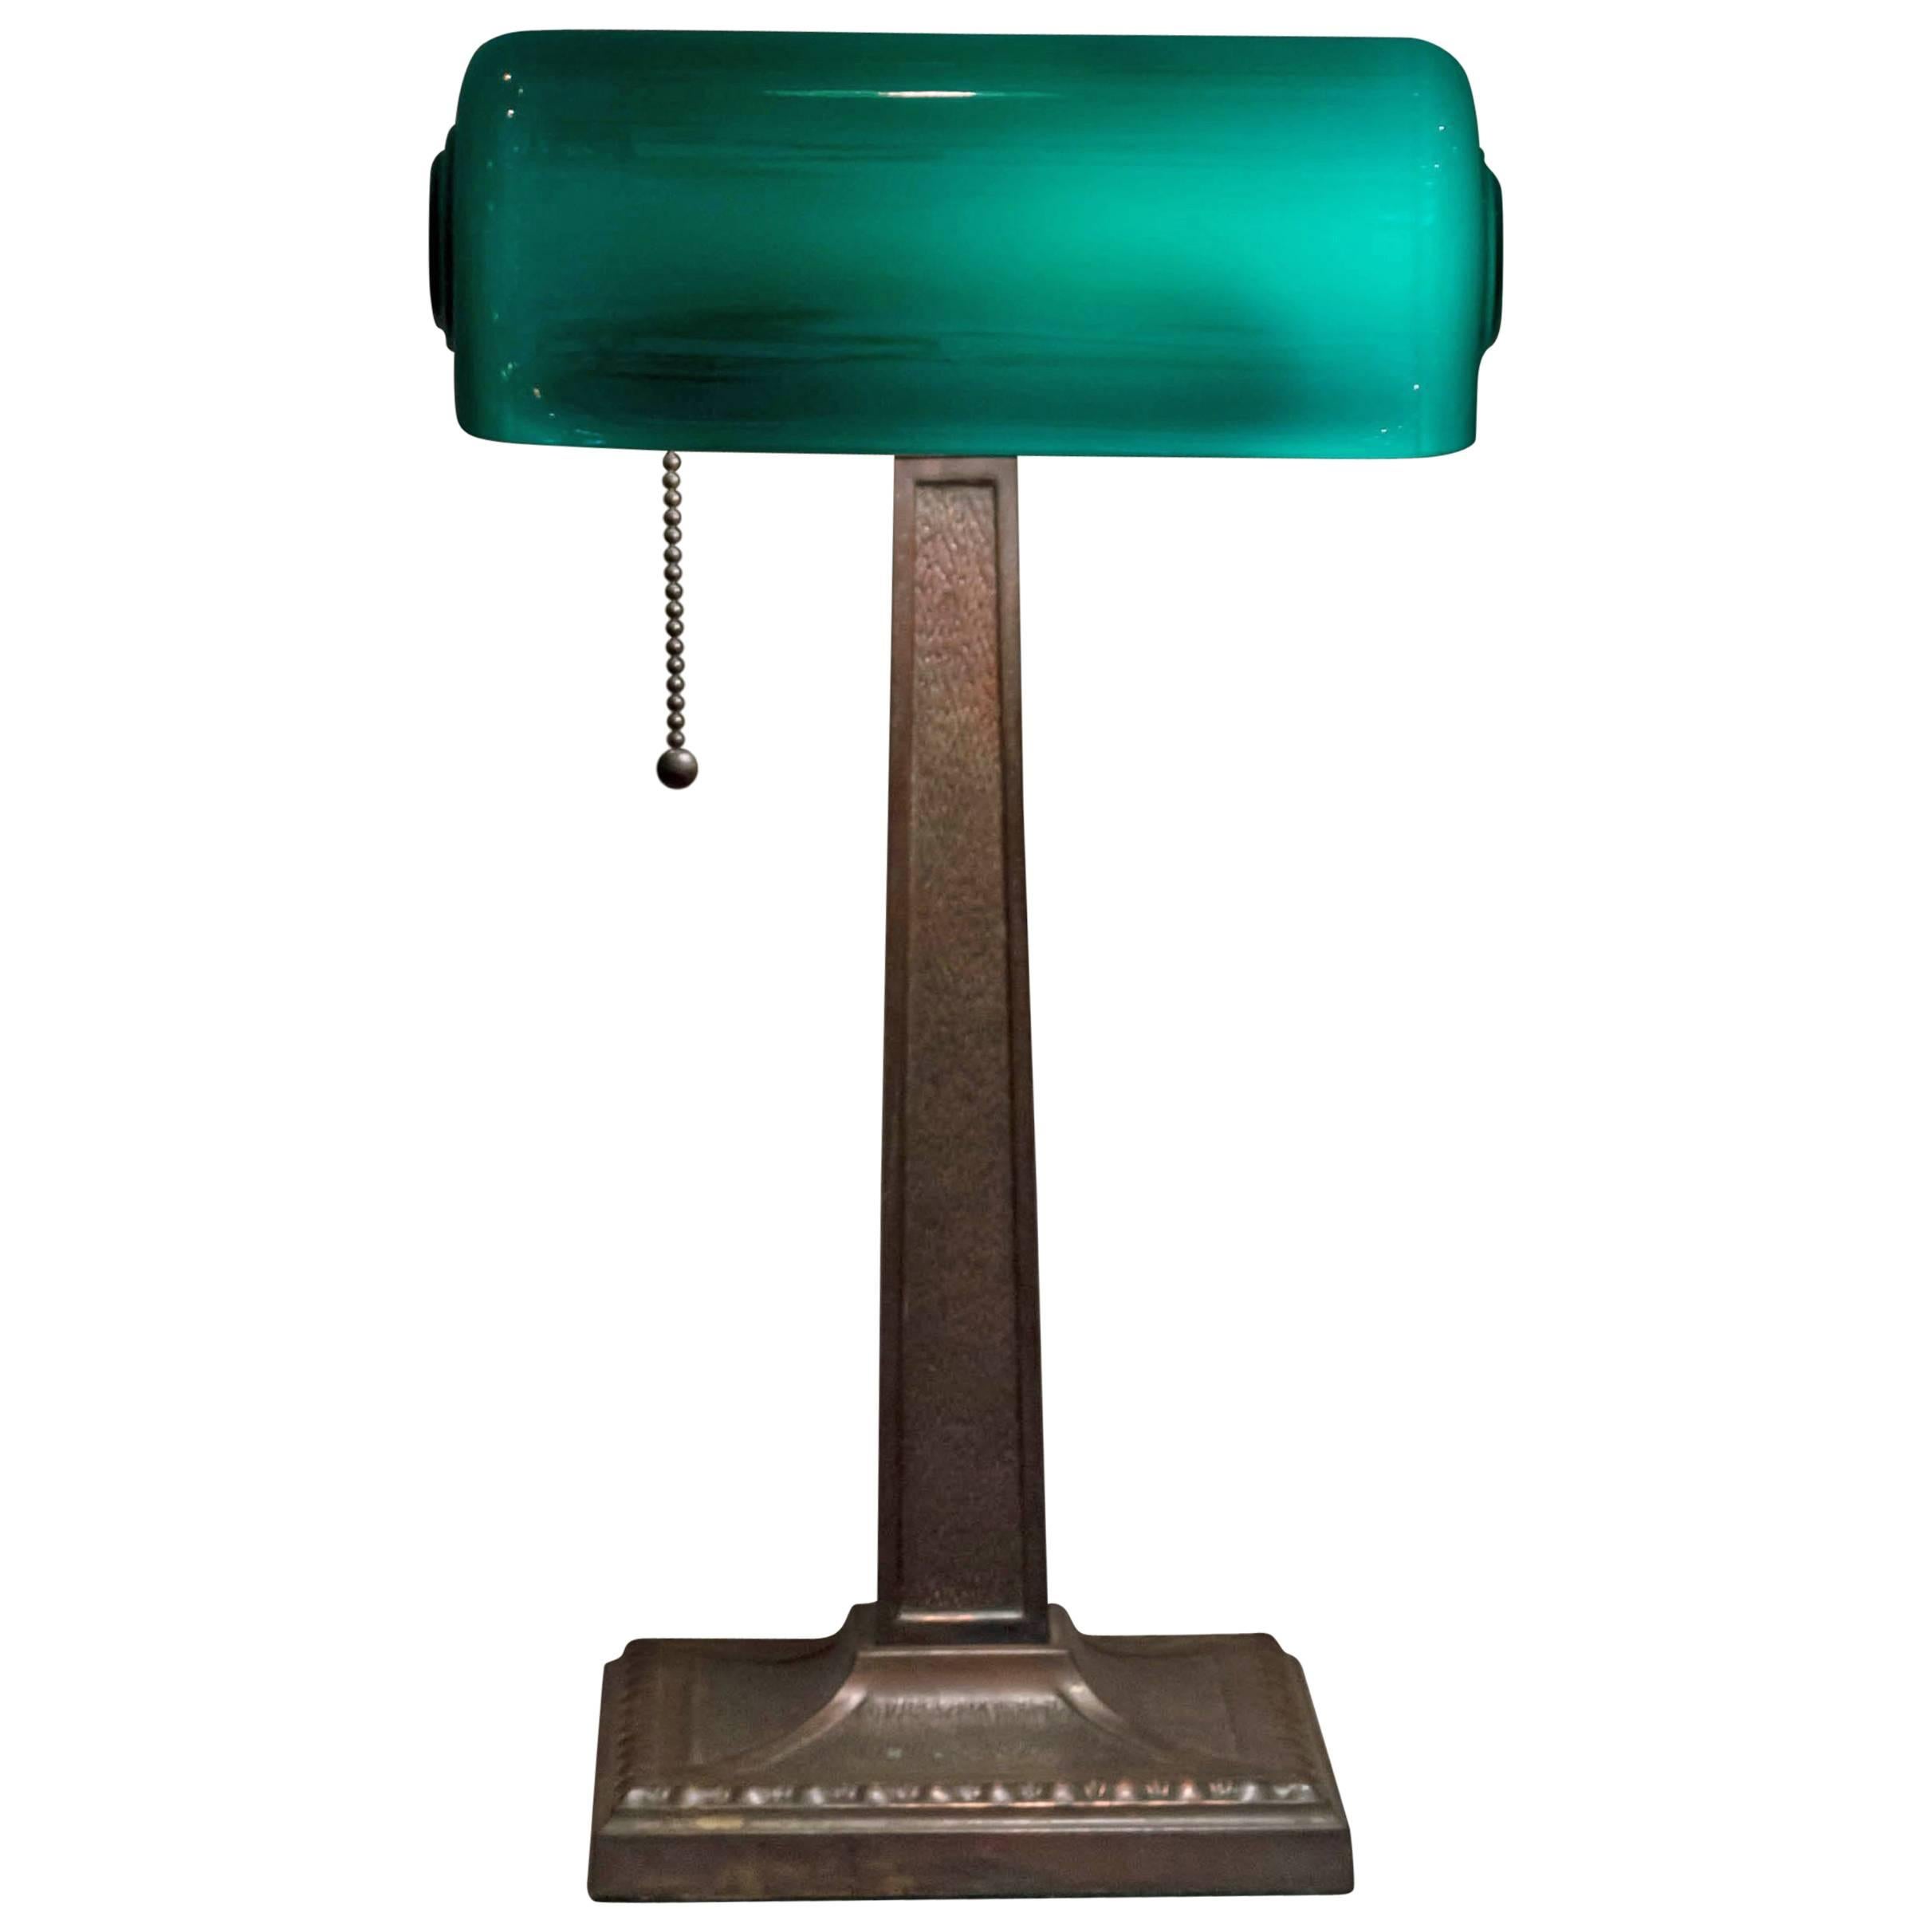 Banker's Desk Lamp by Verdelite